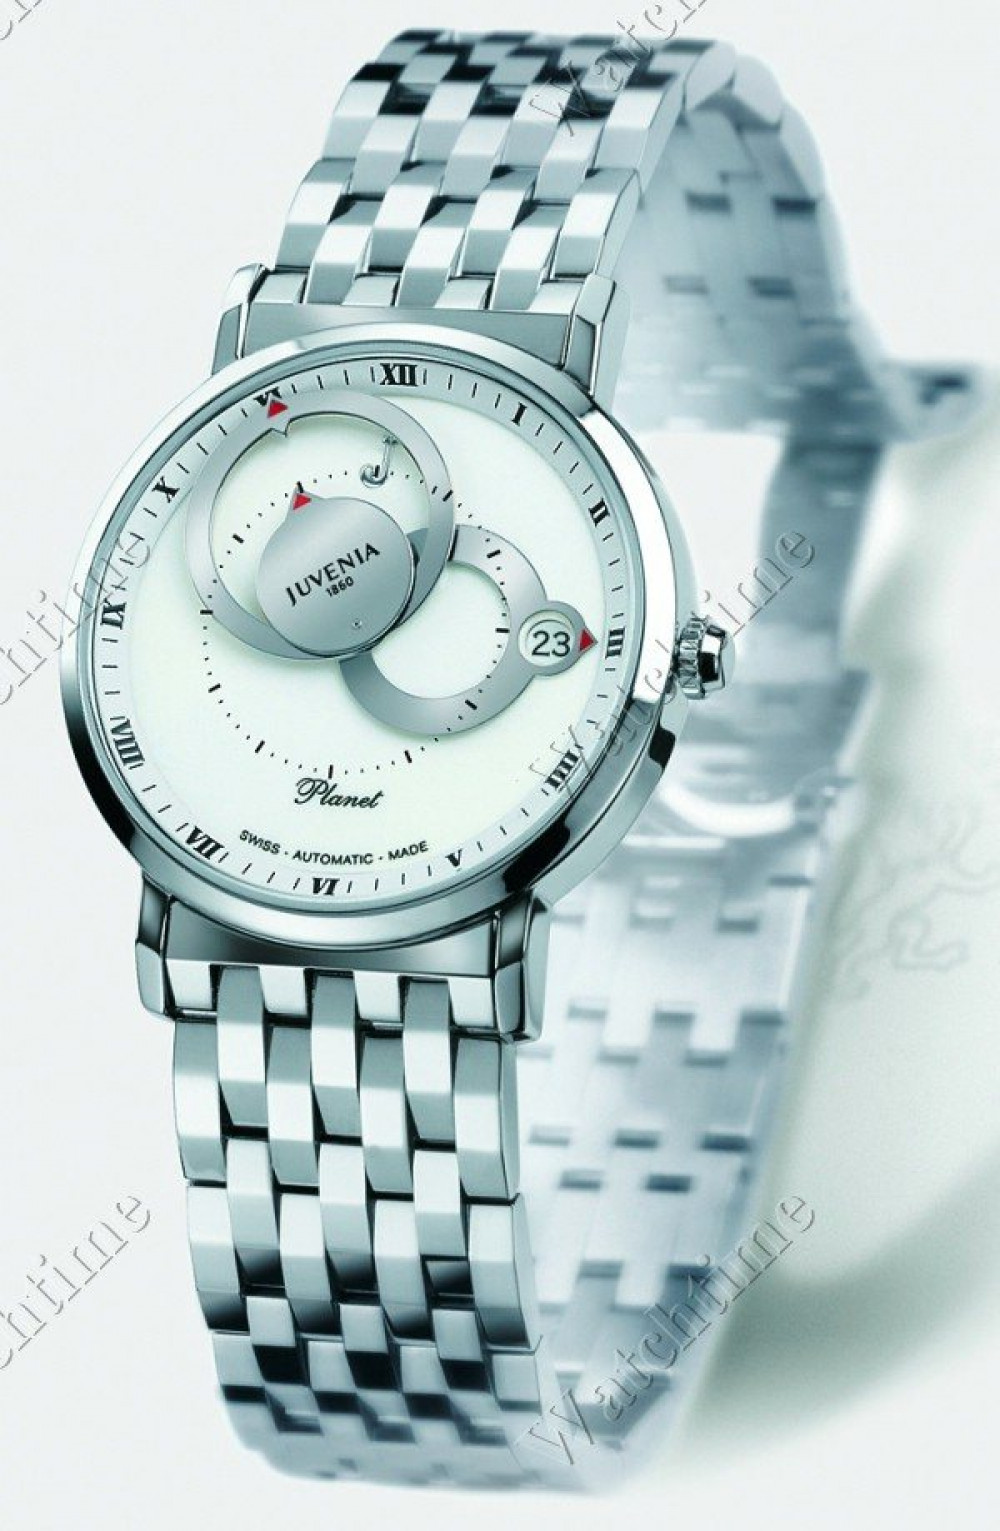 Zegarek firmy Juvenia, model Planet